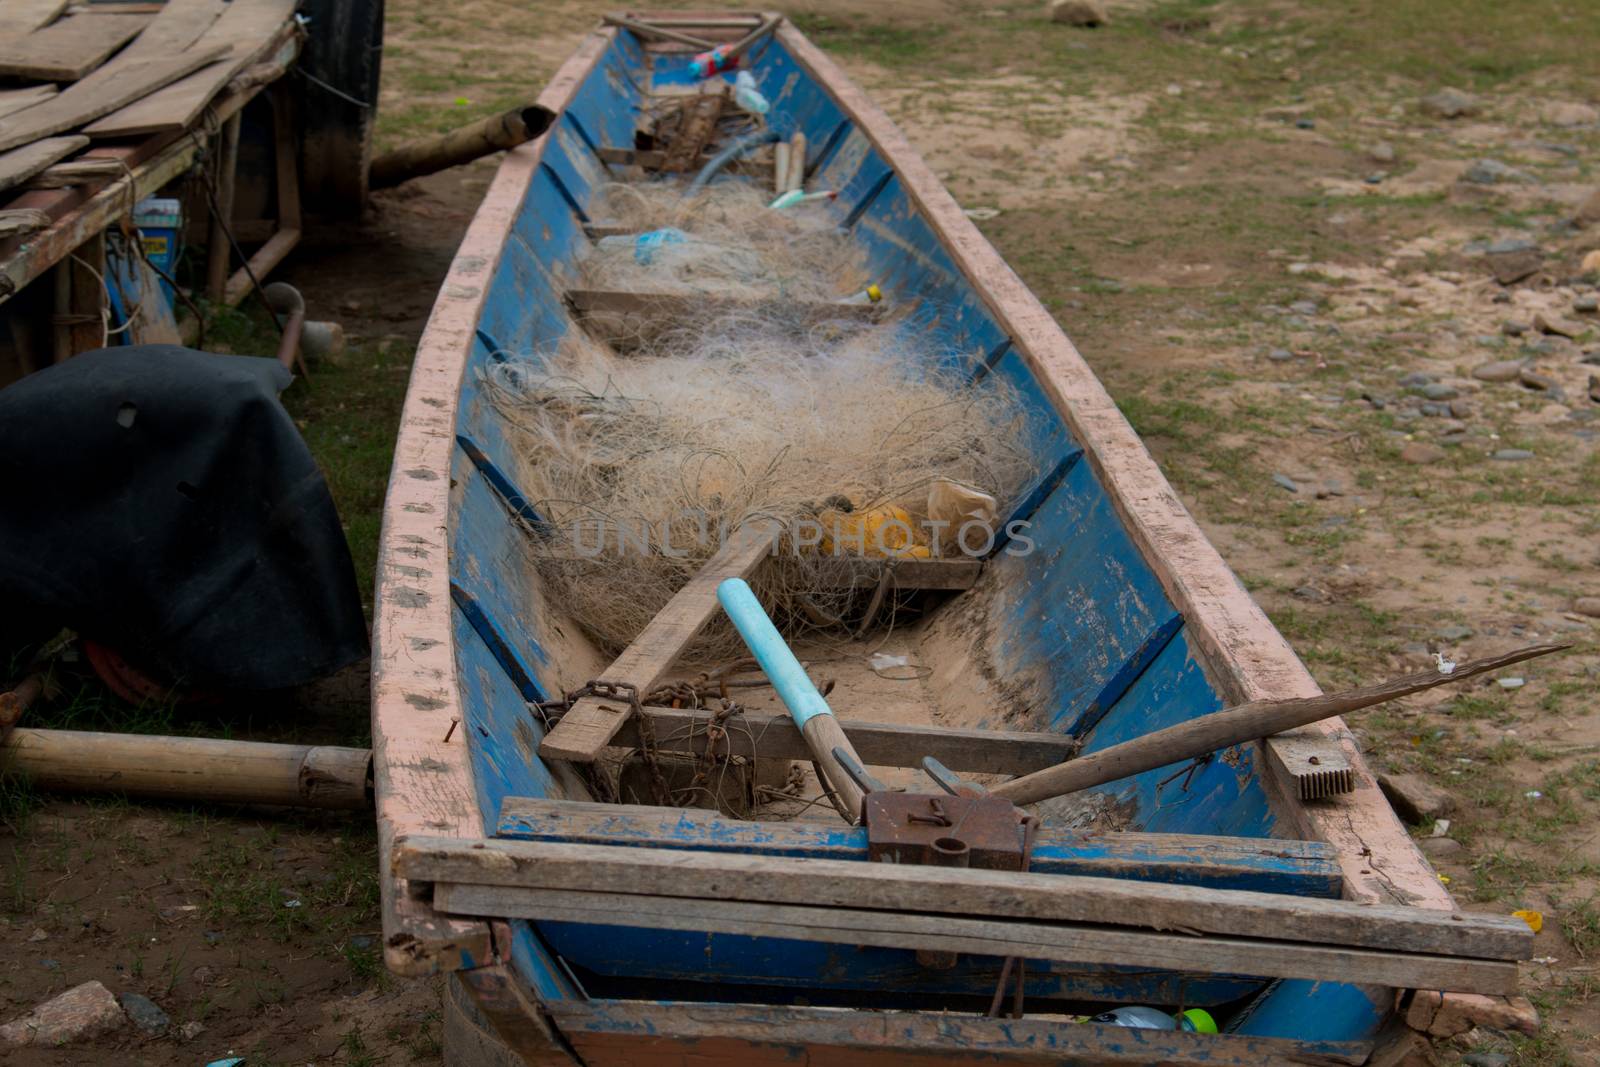 Boat across the Mekong River by N_u_T